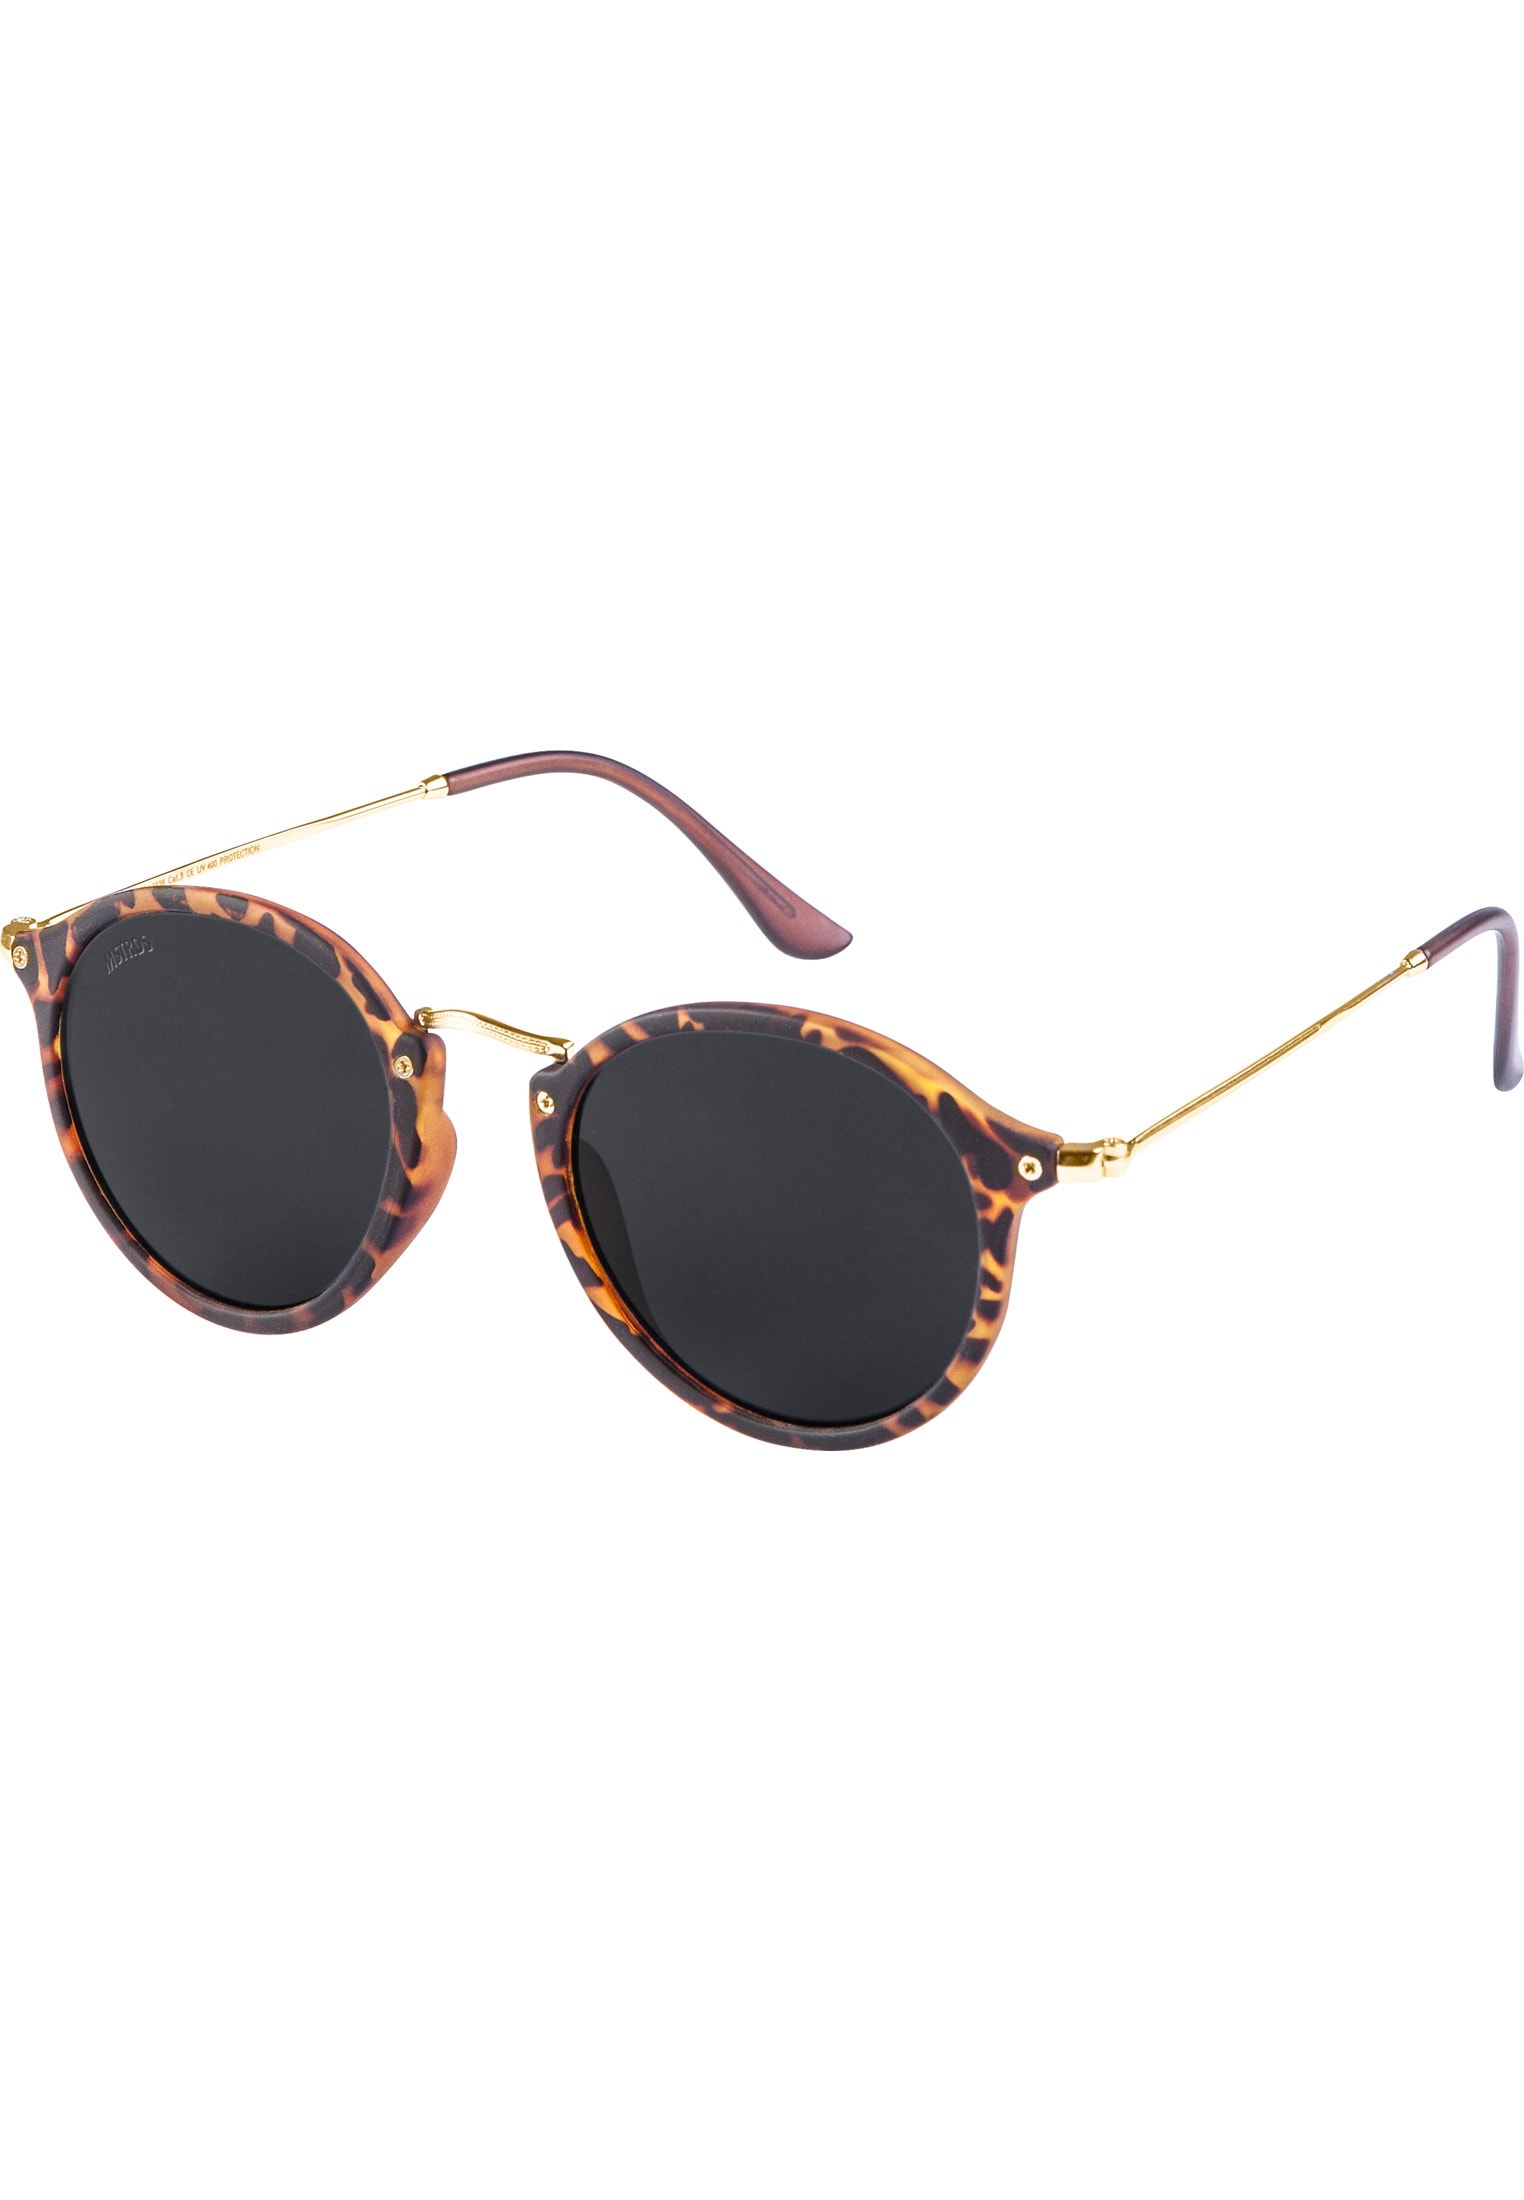 »Accessoires Sunglasses online BAUR Sonnenbrille MSTRDS bestellen Spy« |